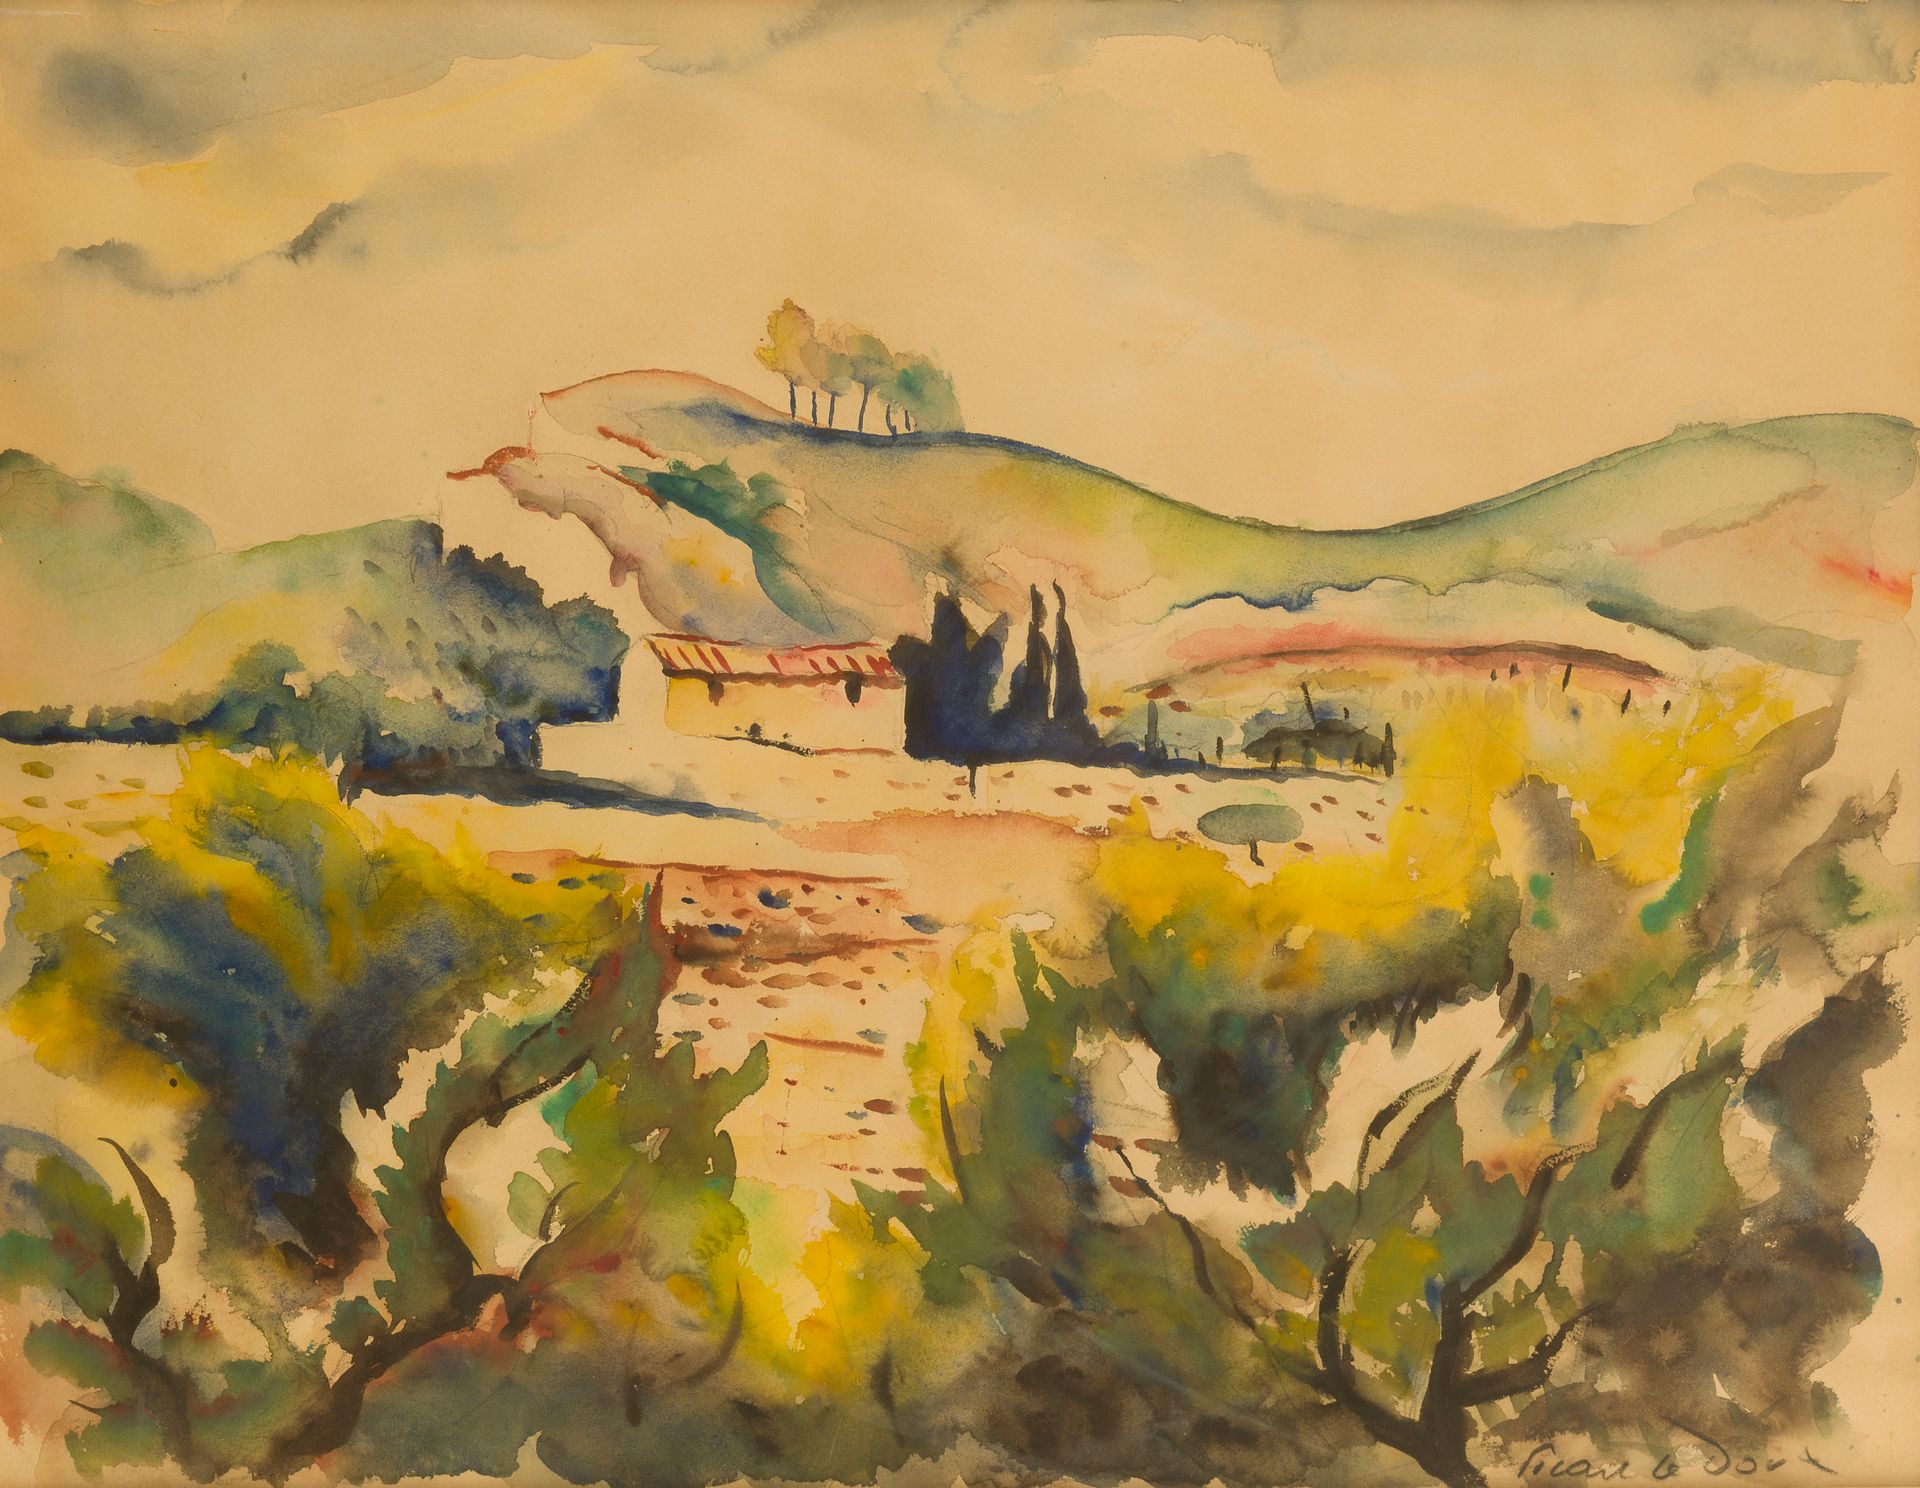 Null 查尔斯-皮卡特-勒杜(1881-1959)
普罗旺斯的风景
水彩画
右下方有签名
49 x 63 cm